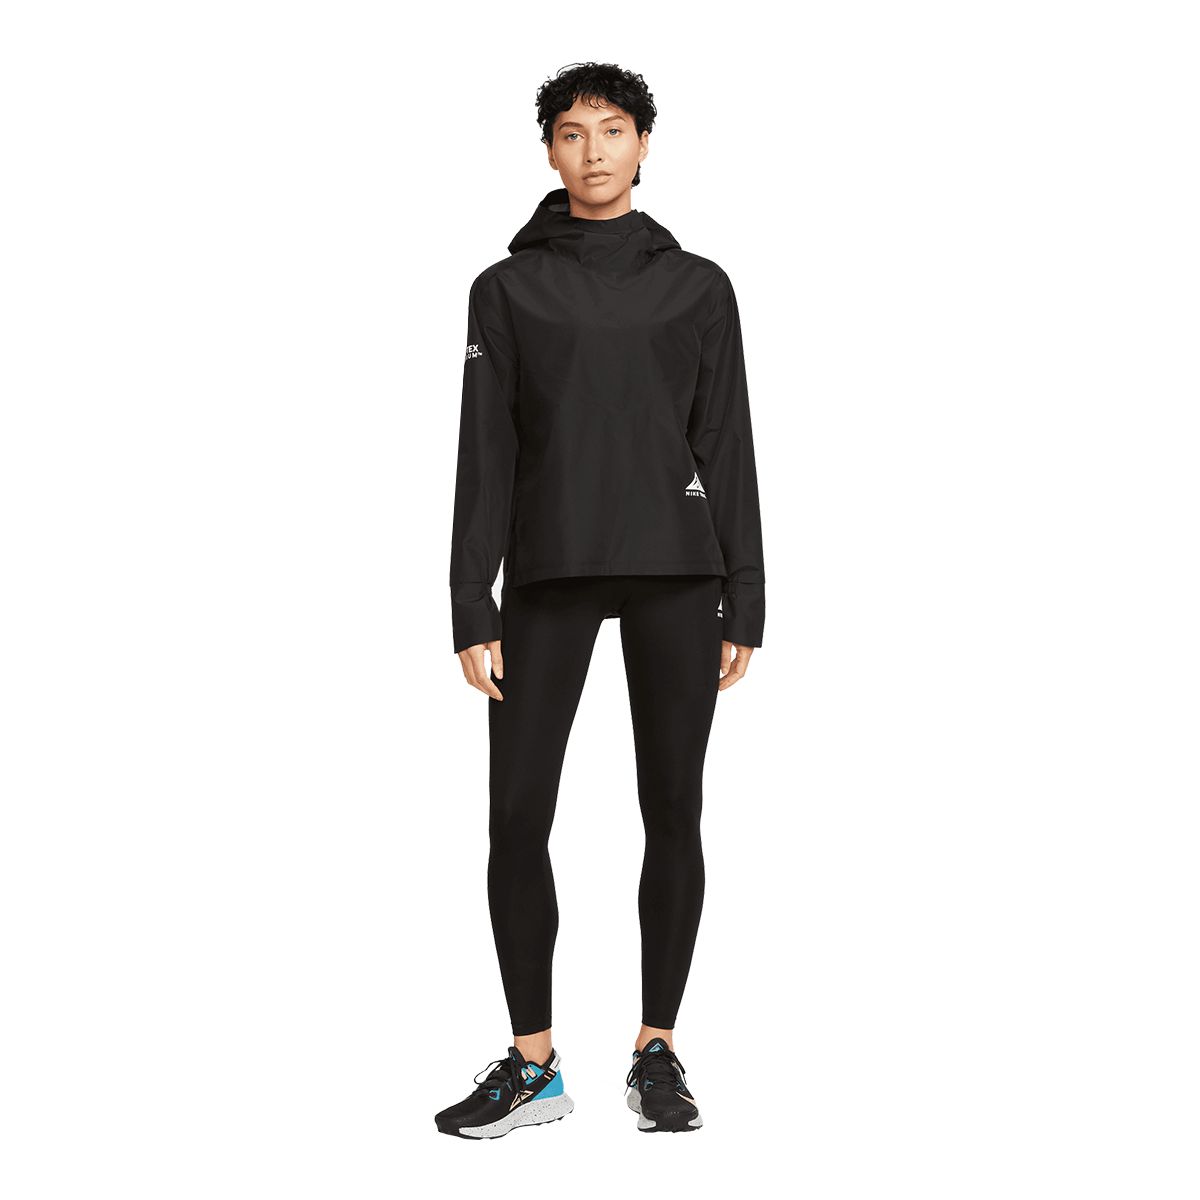 Women's, Nike Epic Luxe Trail Shorts